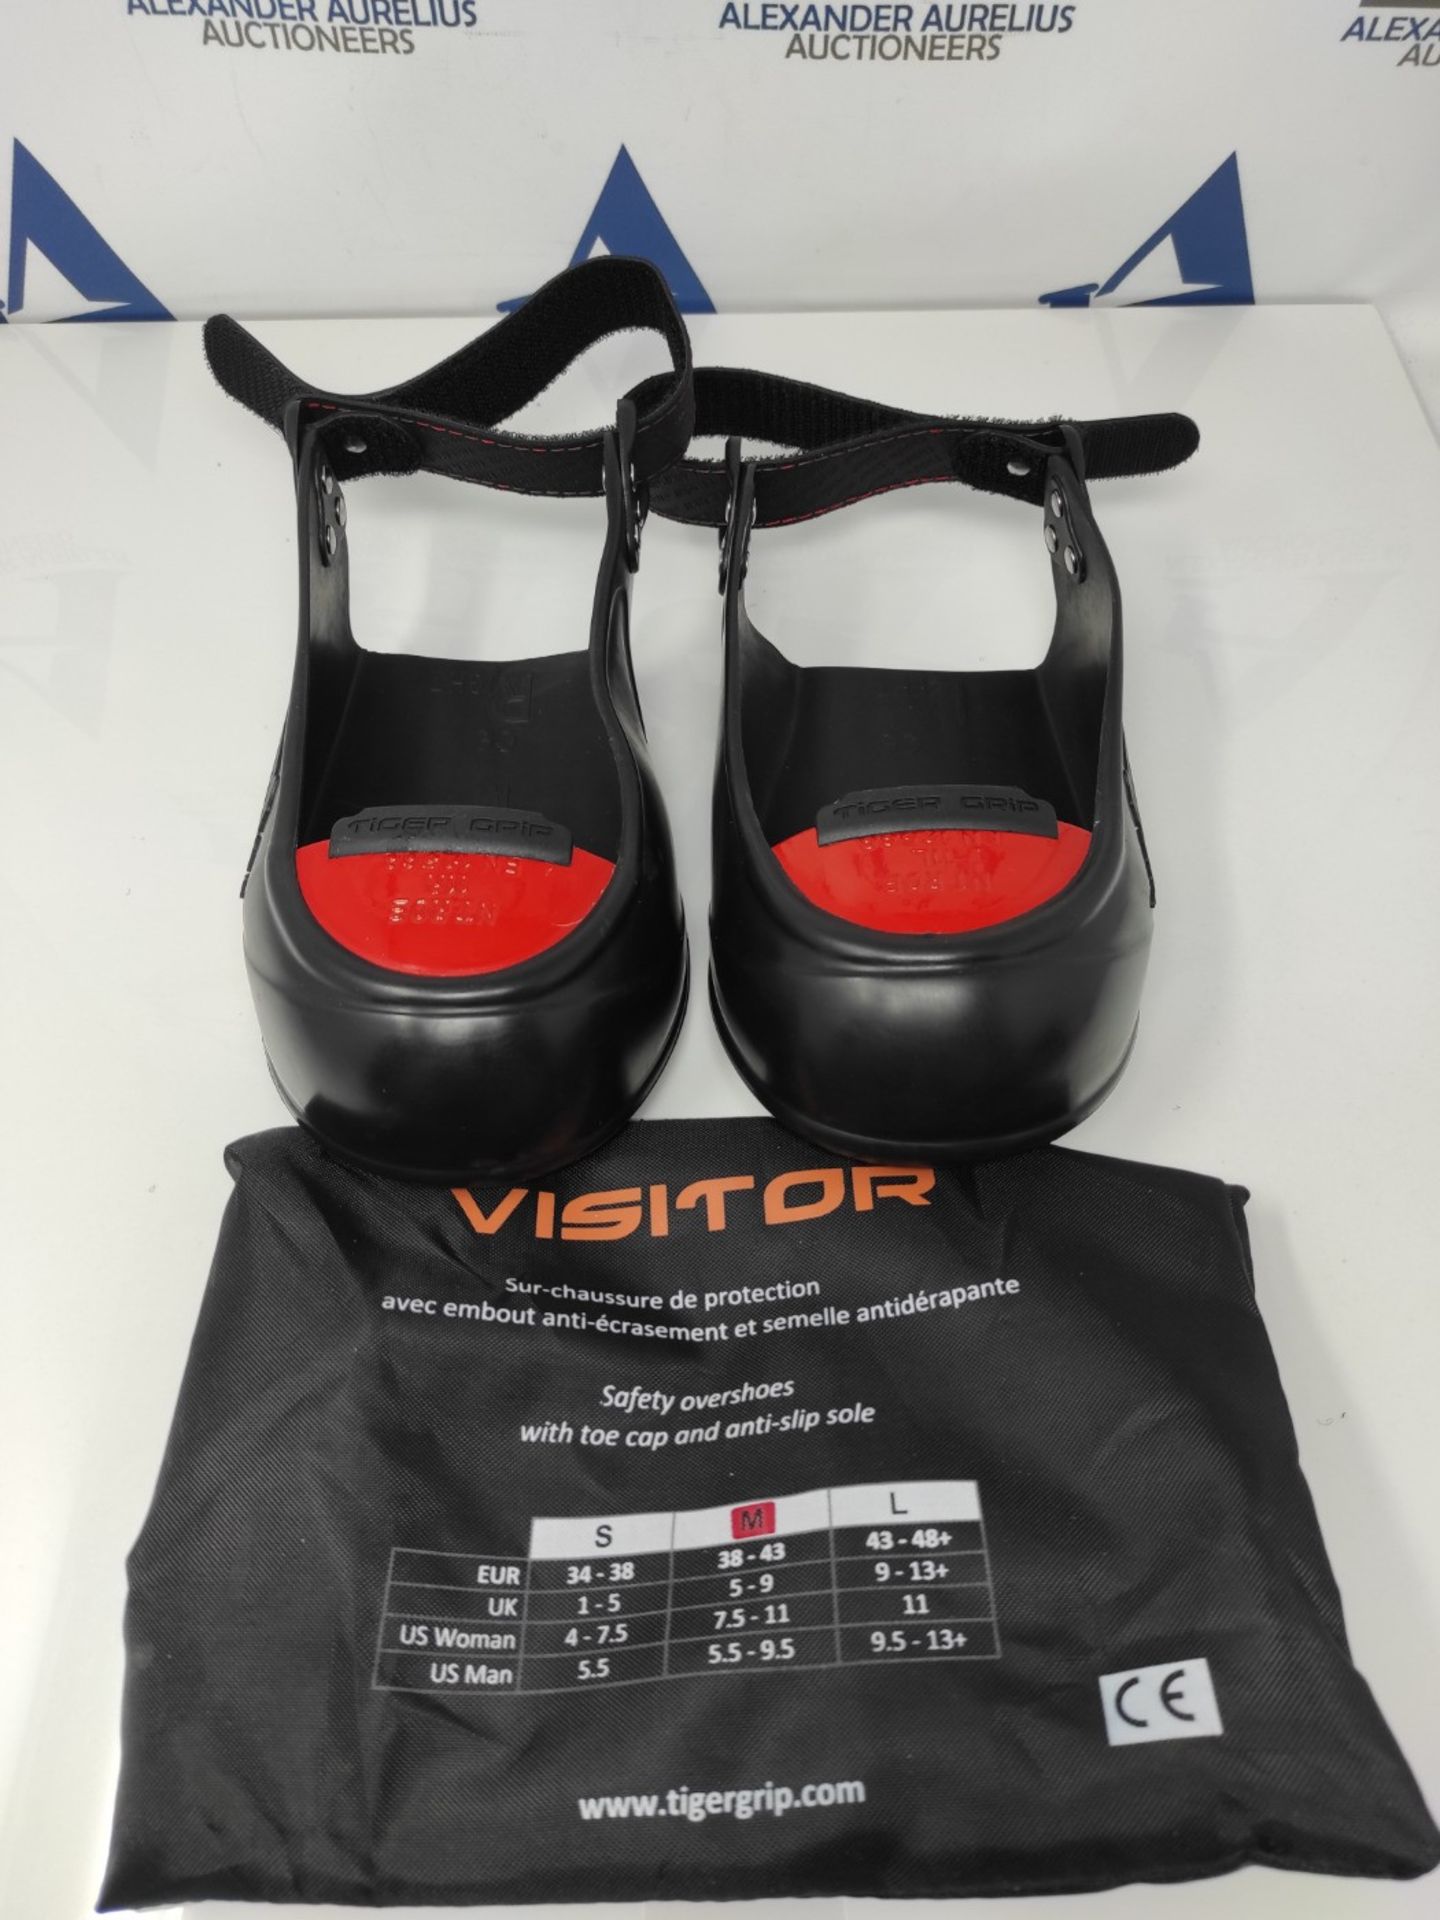 Tigergrip Safetycap Visitor Safety Toecap Overshoes Size Medium (Pair) - EN safety cer - Image 3 of 3